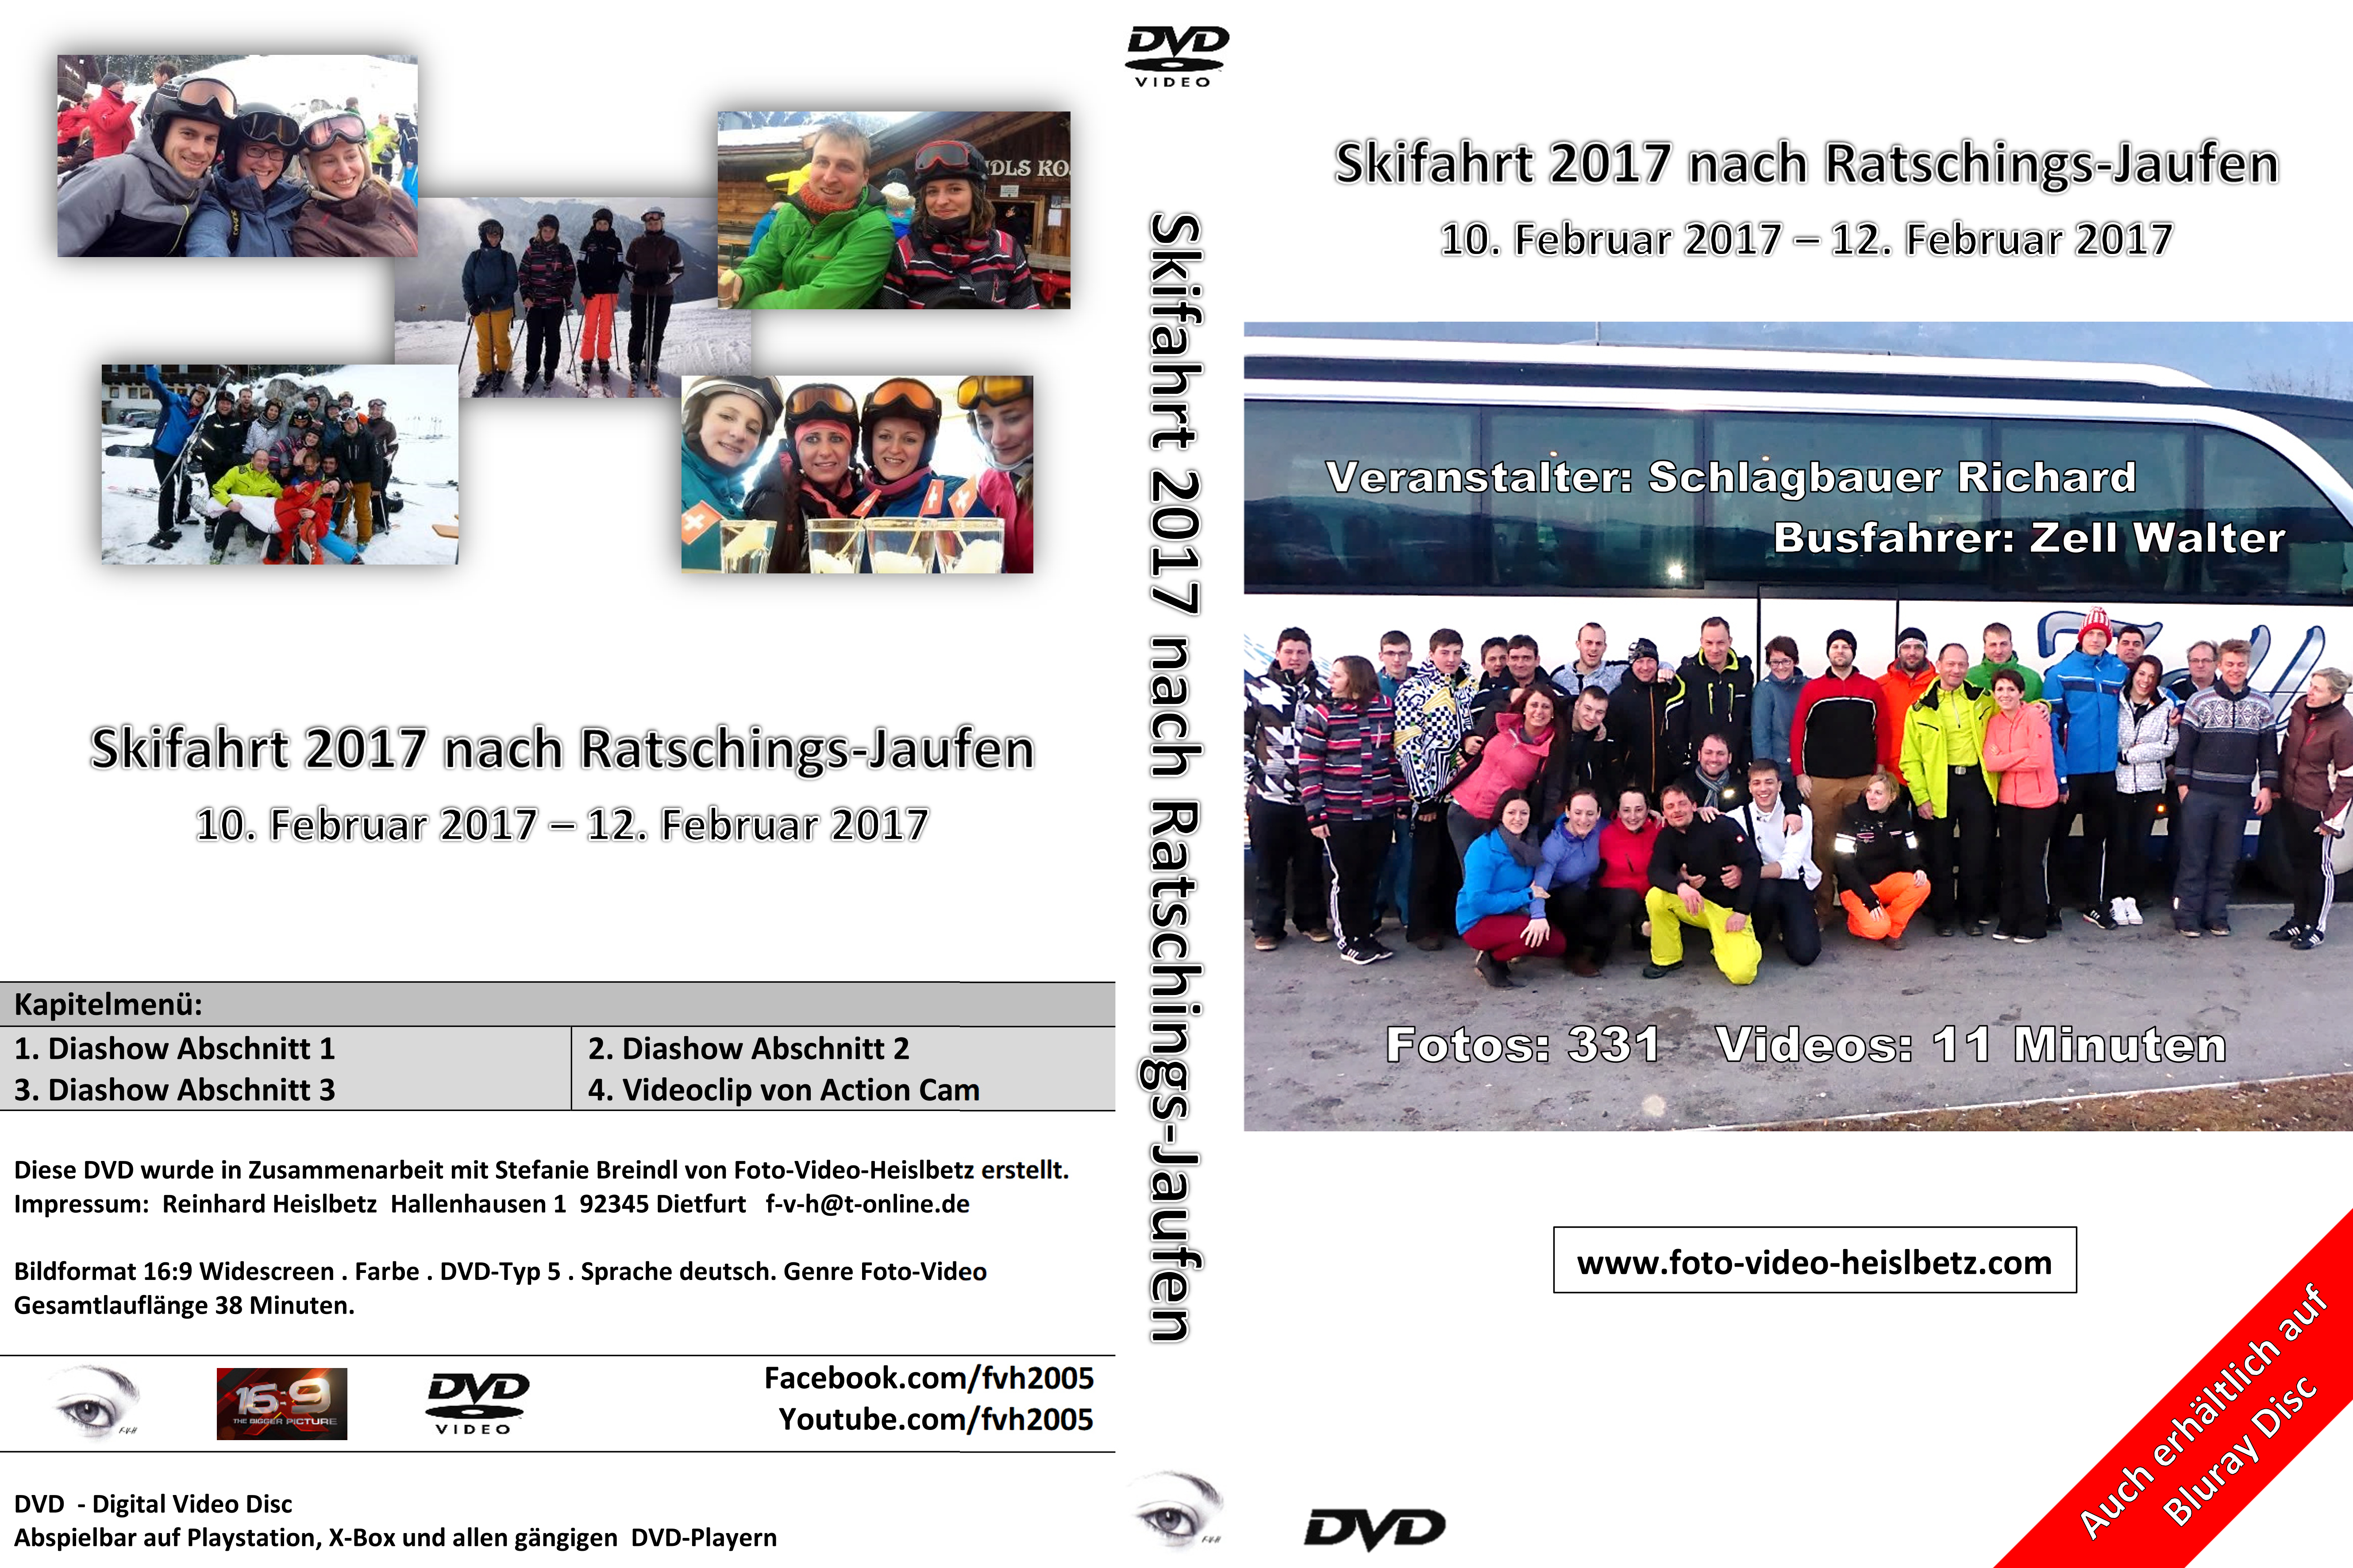 DVD 42